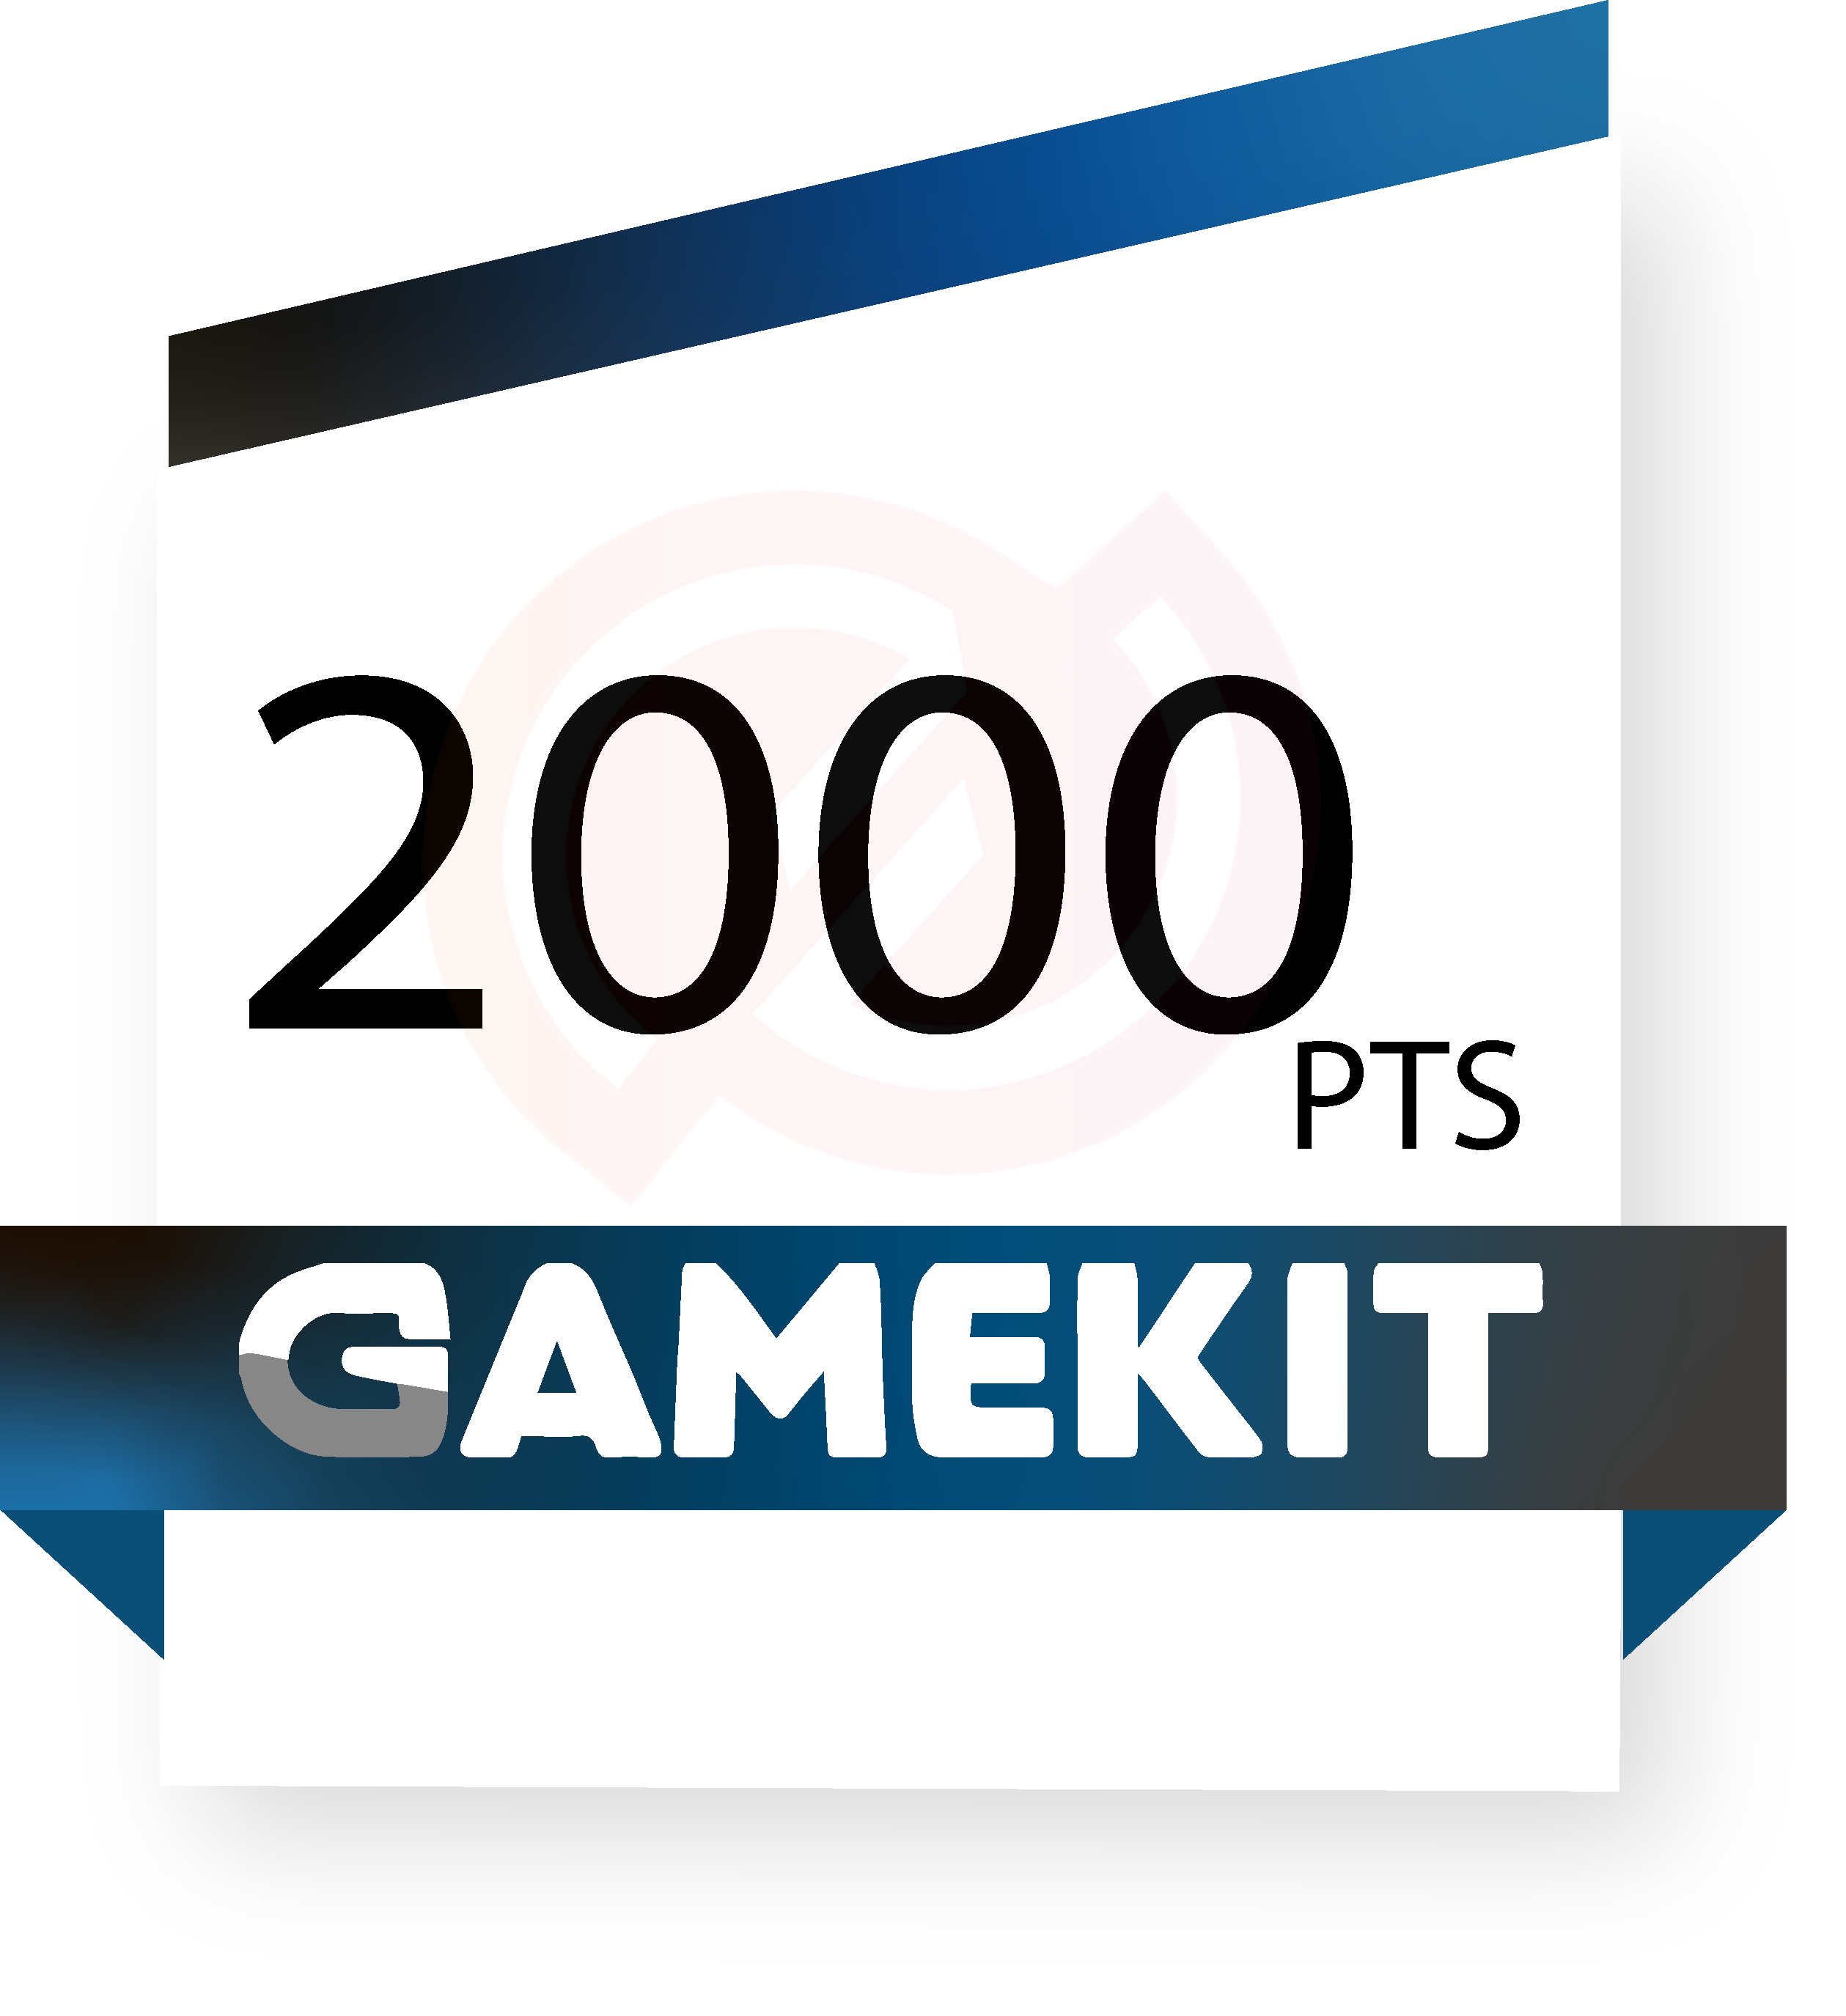 Gamekit : 2000 points